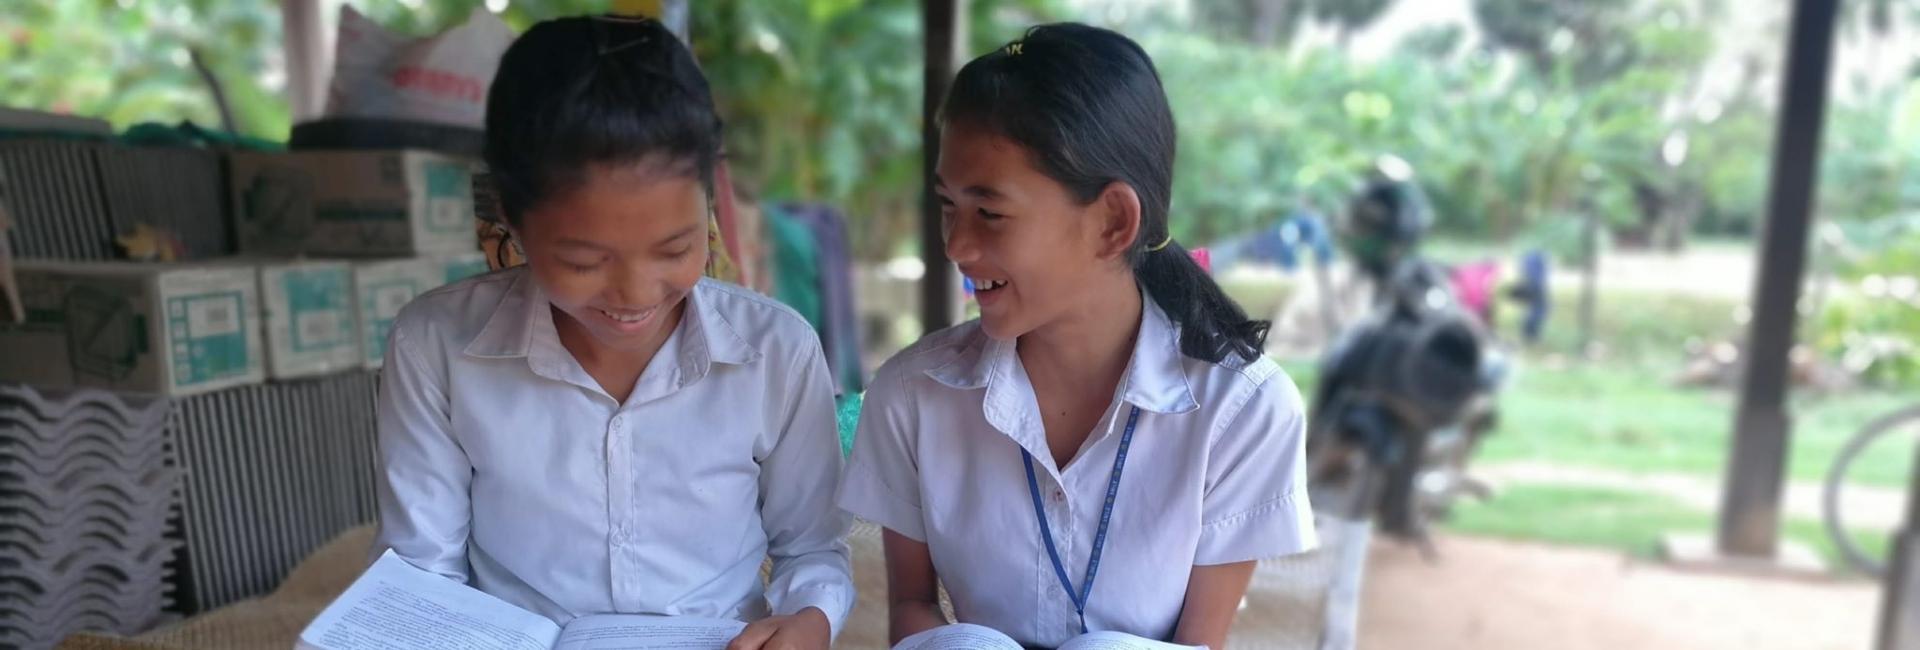 Provide 250 School Uniforms for Disadvantaged Girls in Rural Cambodia